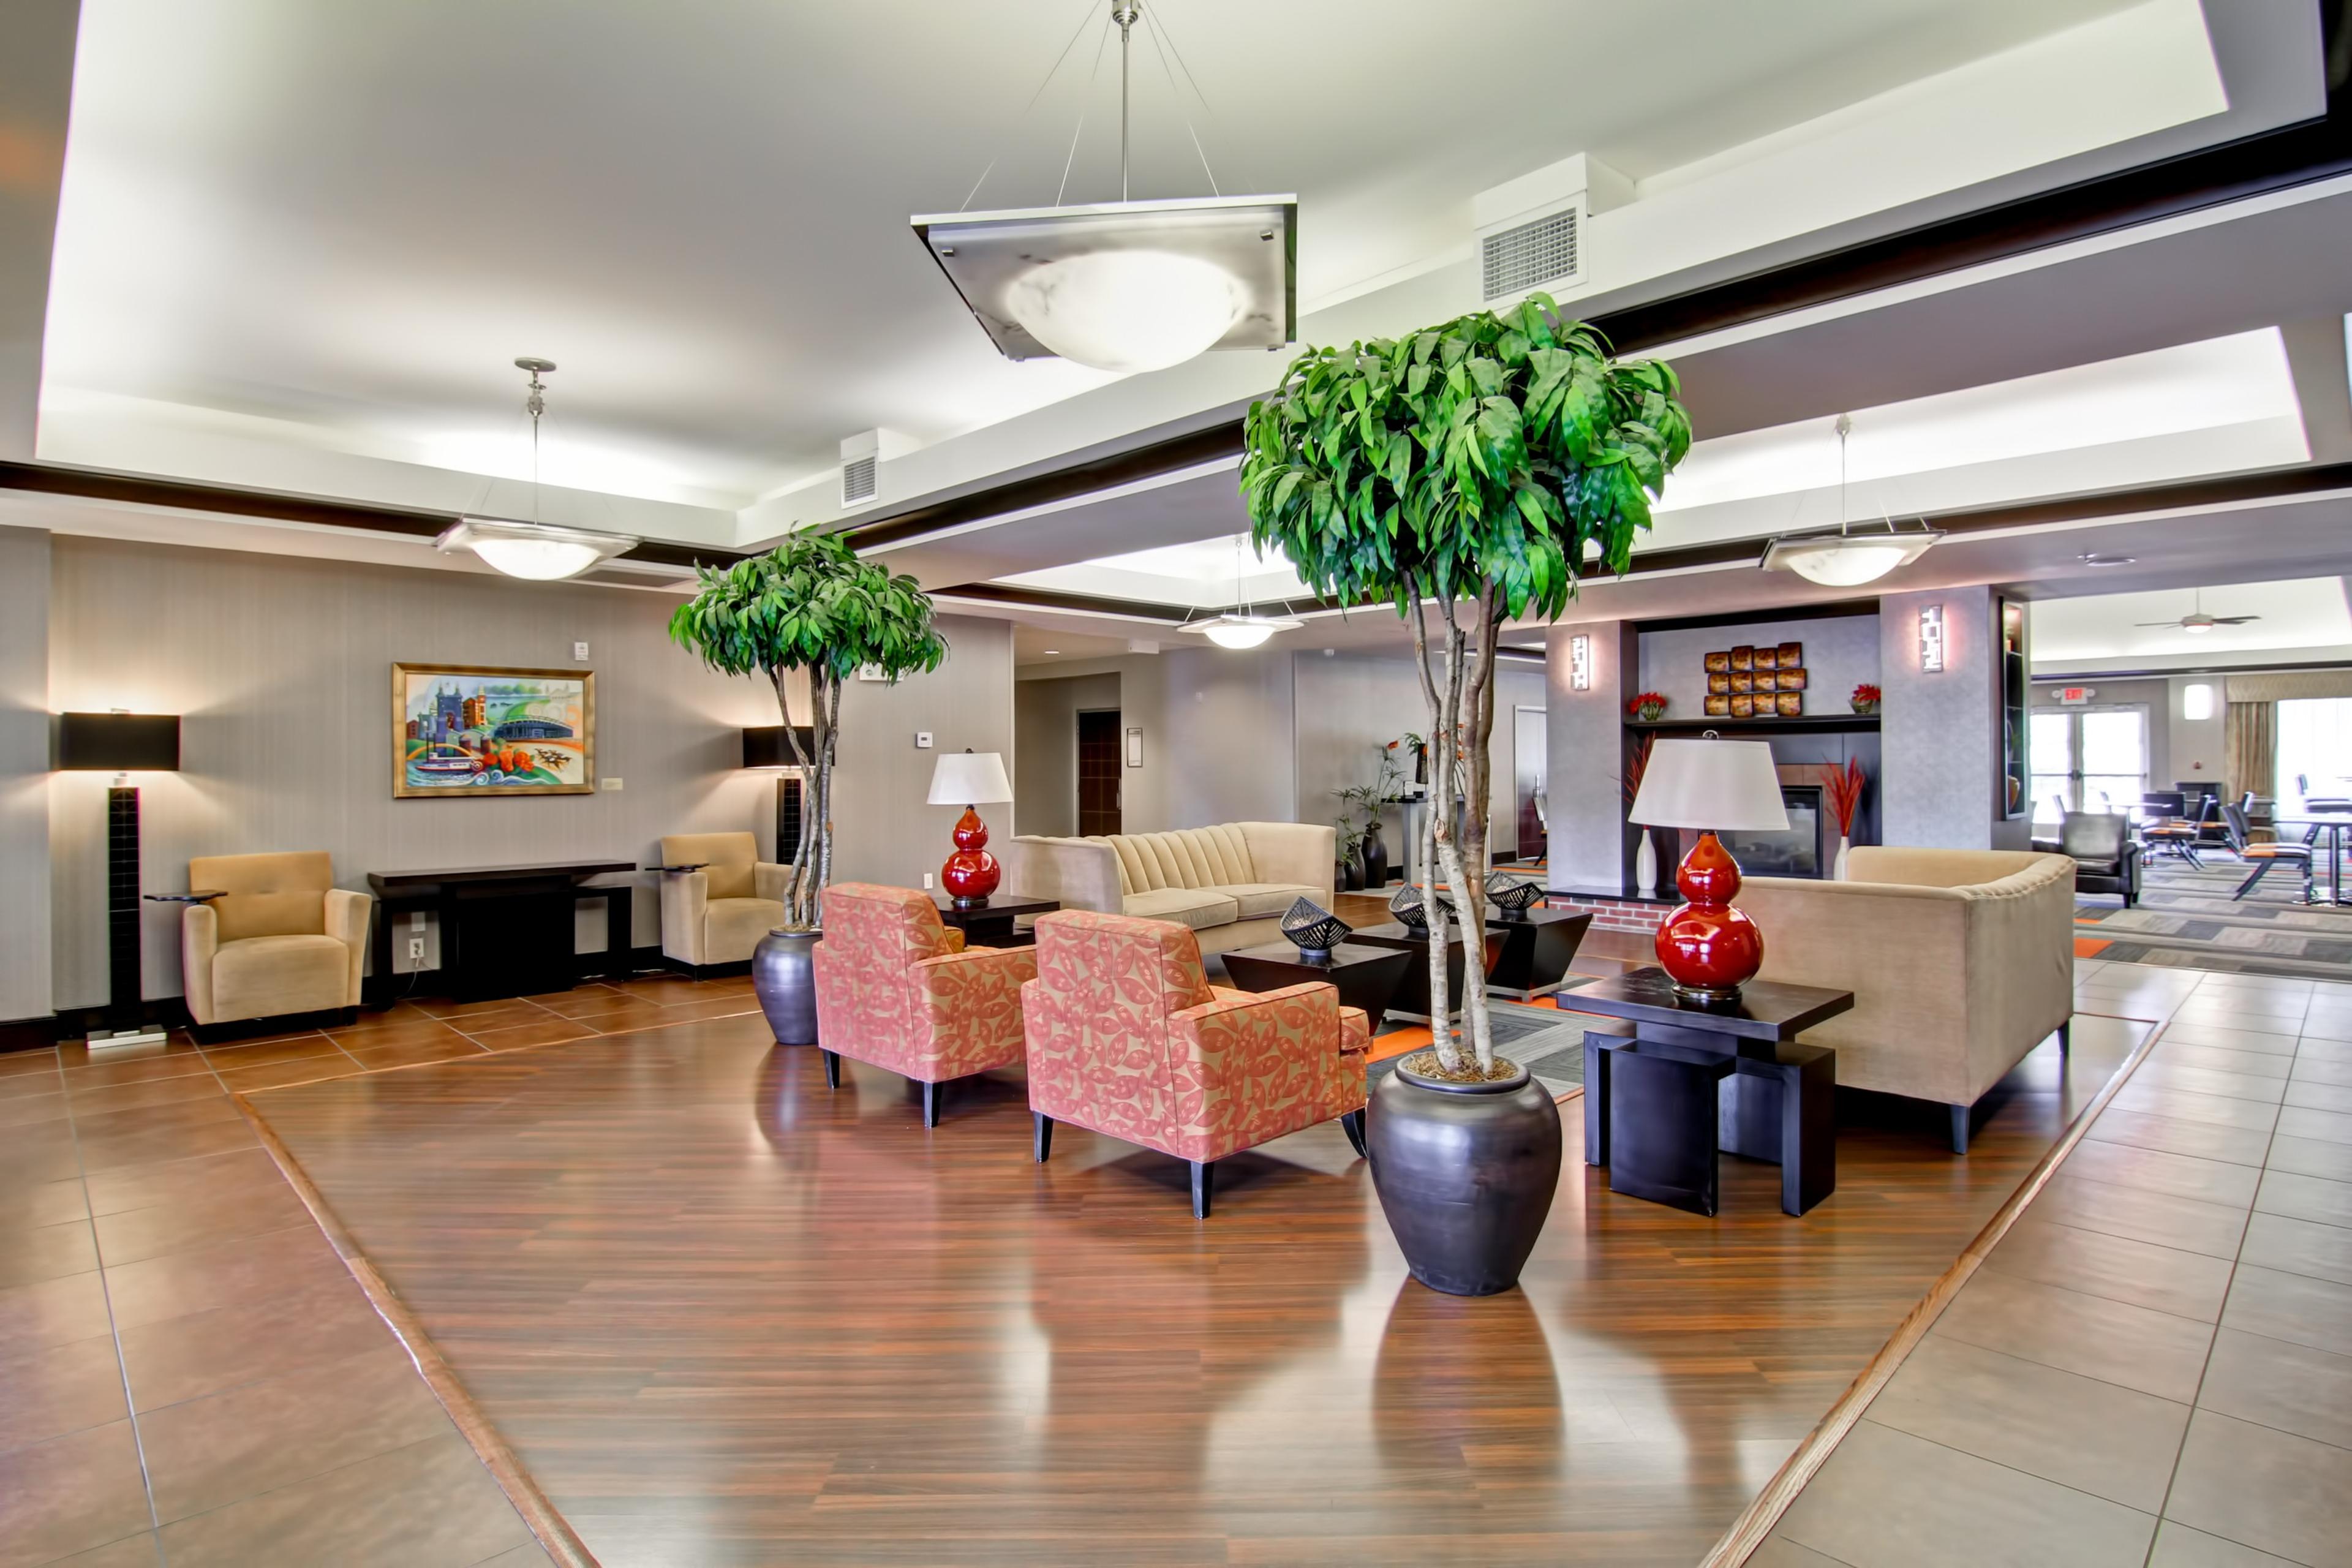 Homewood Suites by Hilton Cincinnati Airport South-Florence